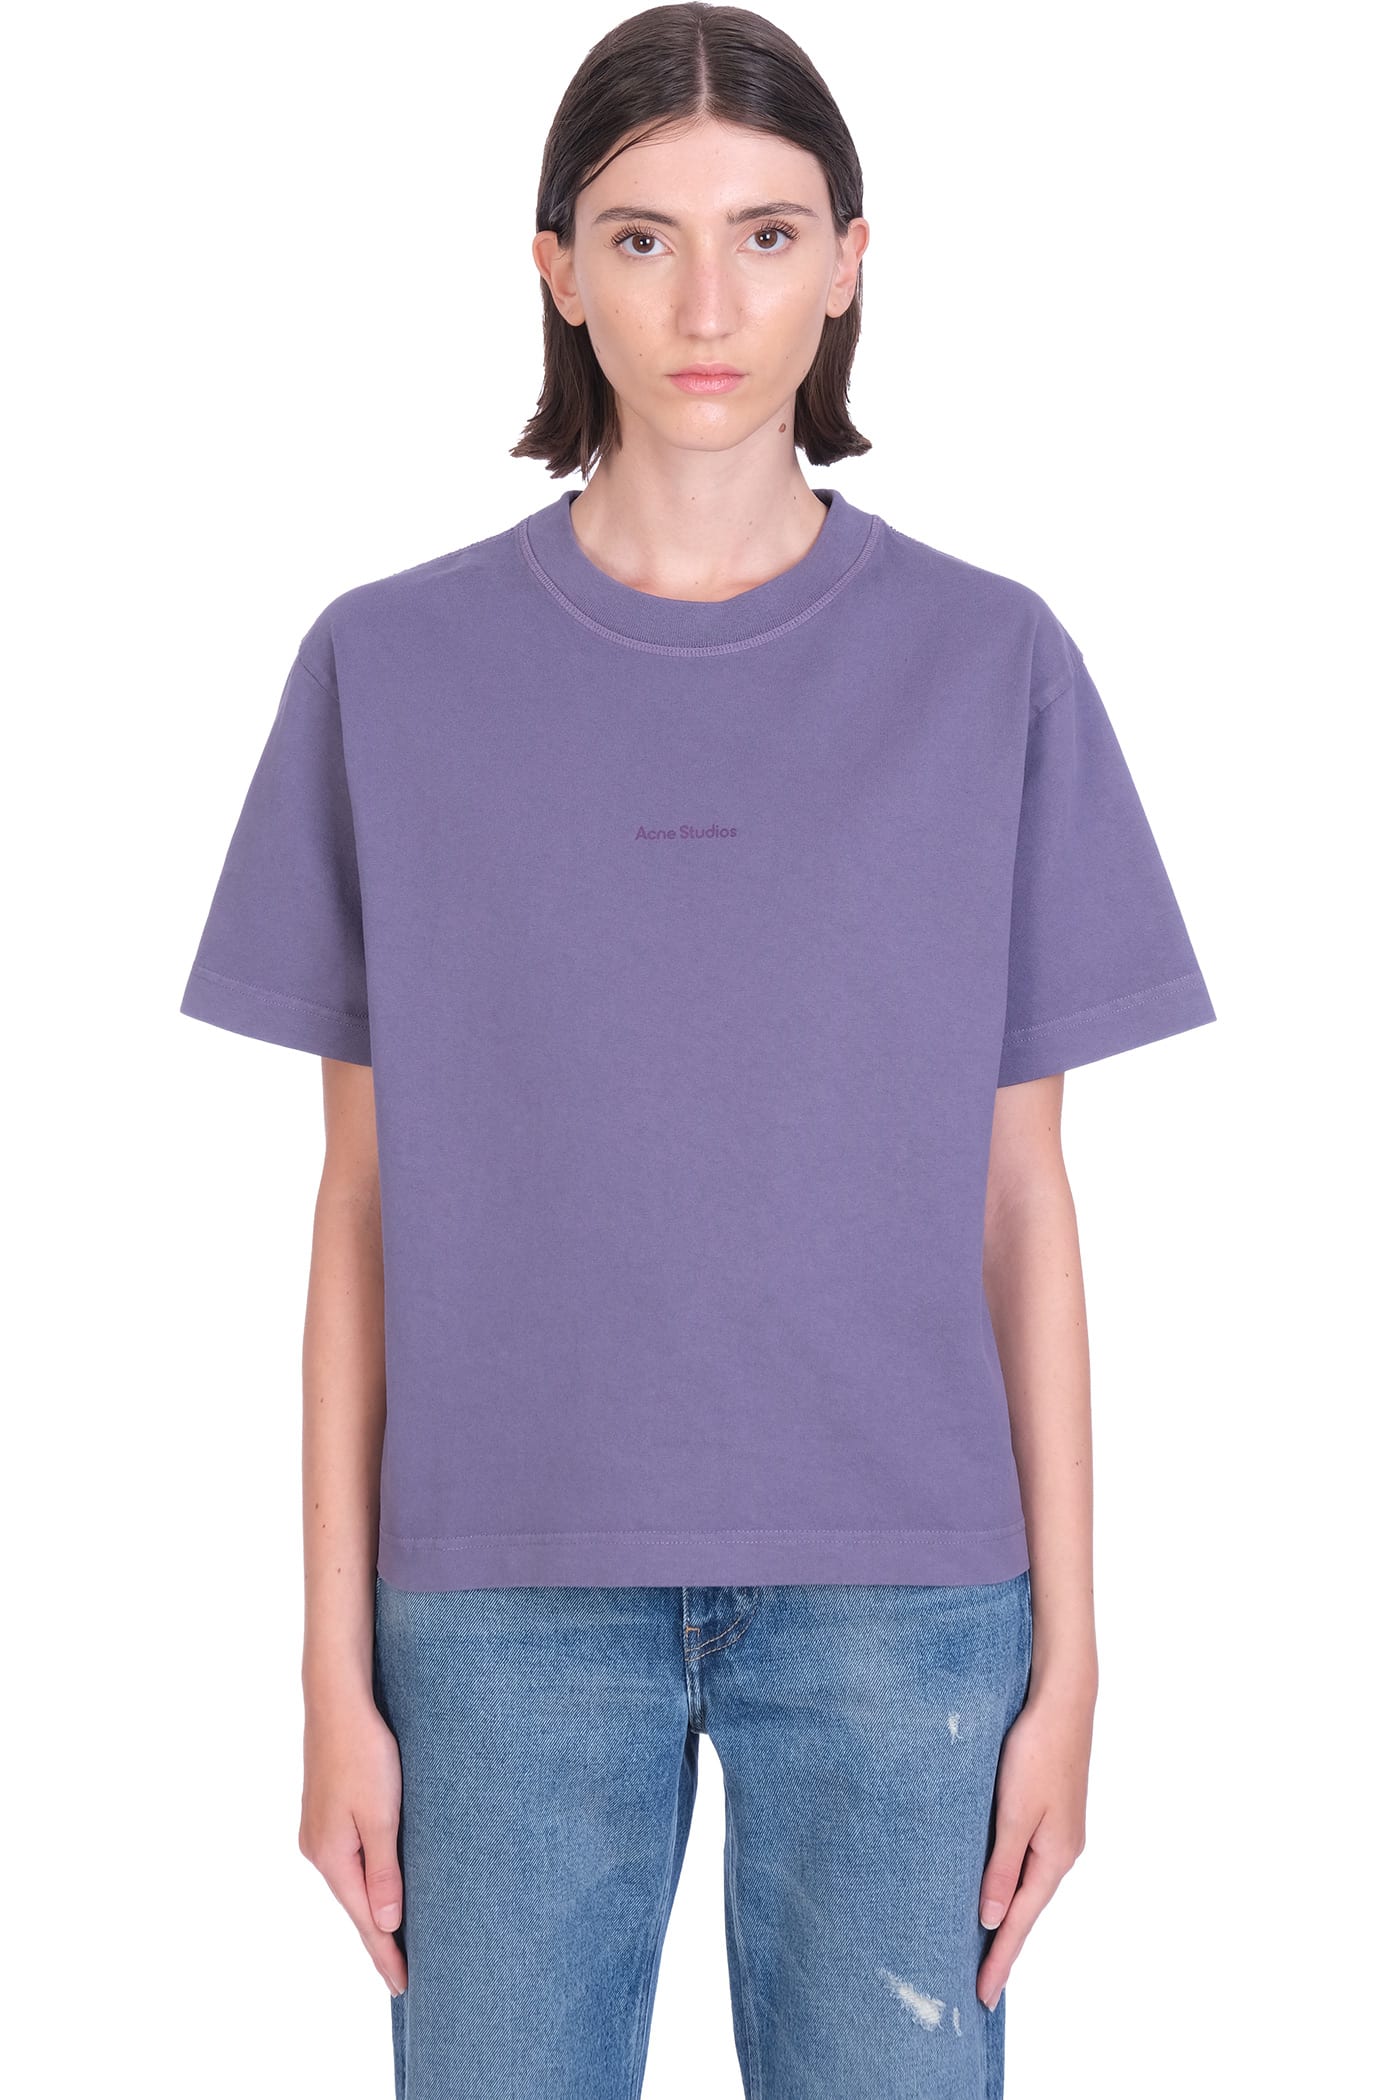 Acne Studios T-shirt In Viola Cotton